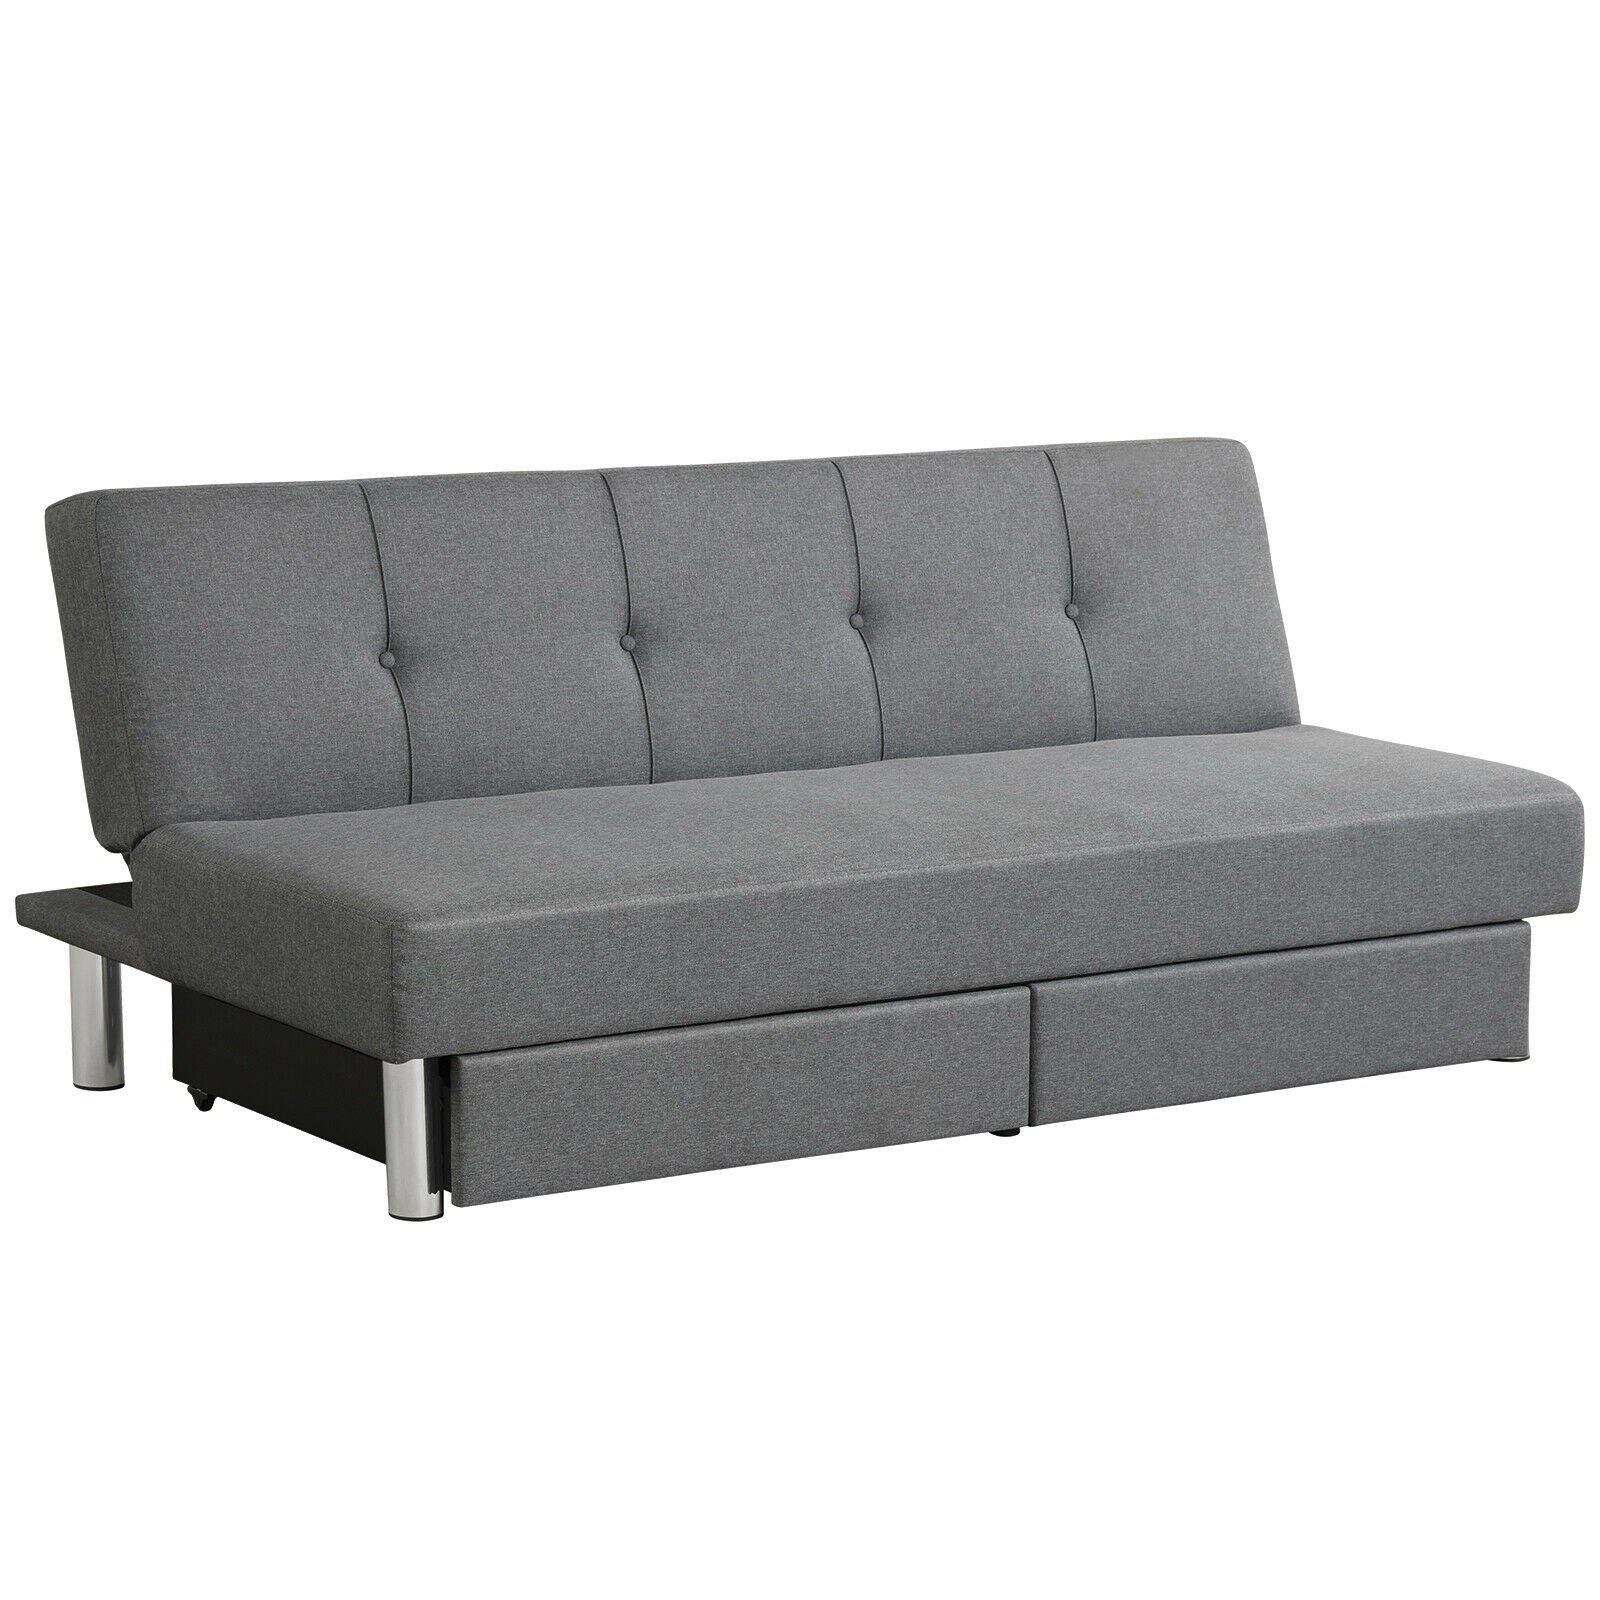 3-Seat Convertible Sofa Bed,Long Sofa w/ 2 Large Drawers, Ergonomic Sleeper w/ 3 Adjustable Angles - Giantexus